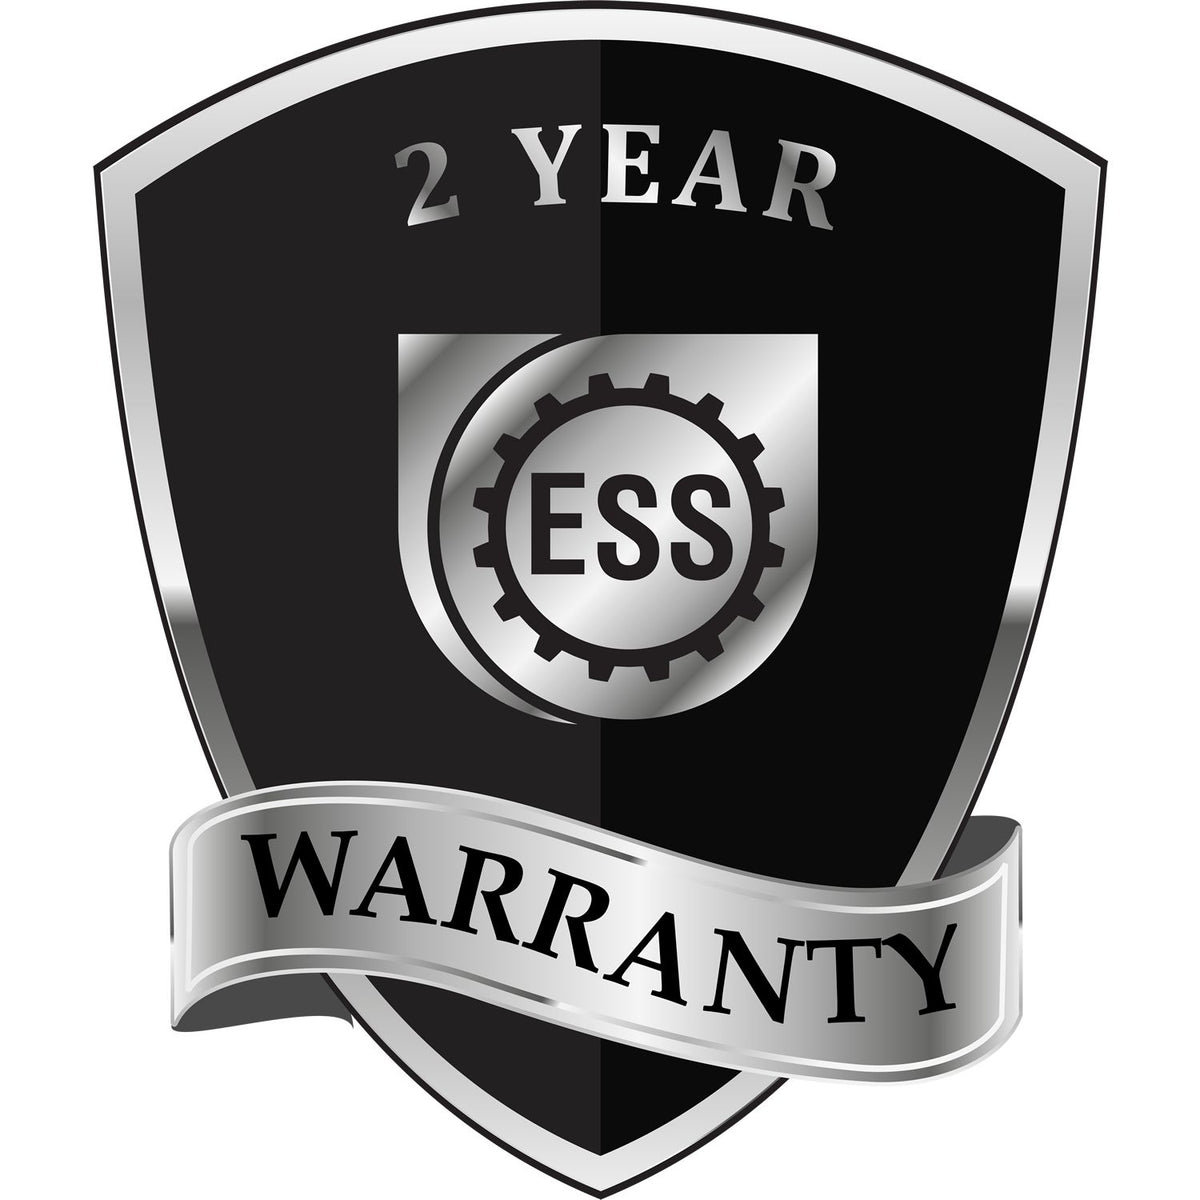 A black and silver badge or emblem showing warranty information for the Handheld Maryland Professional Geologist Embosser